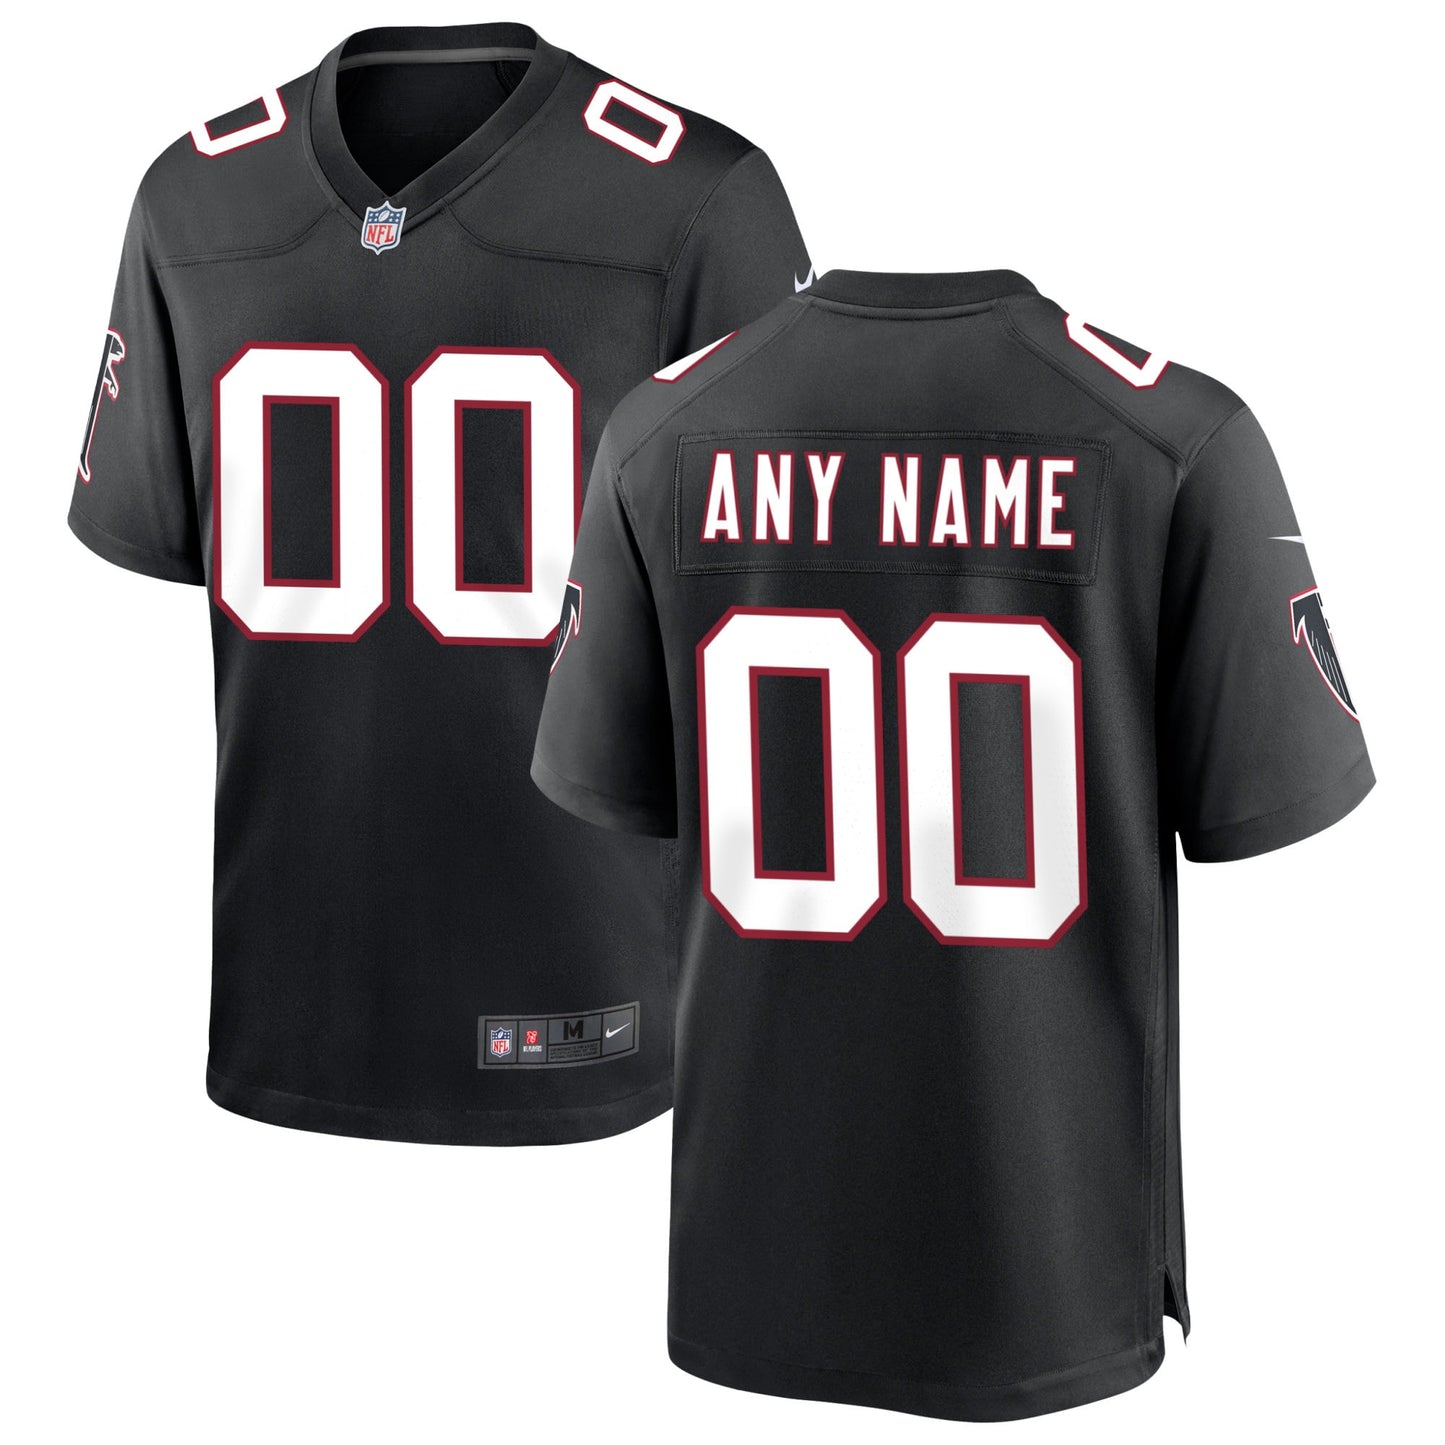 Atlanta Falcons Nike Throwback Custom Game Jersey - Black